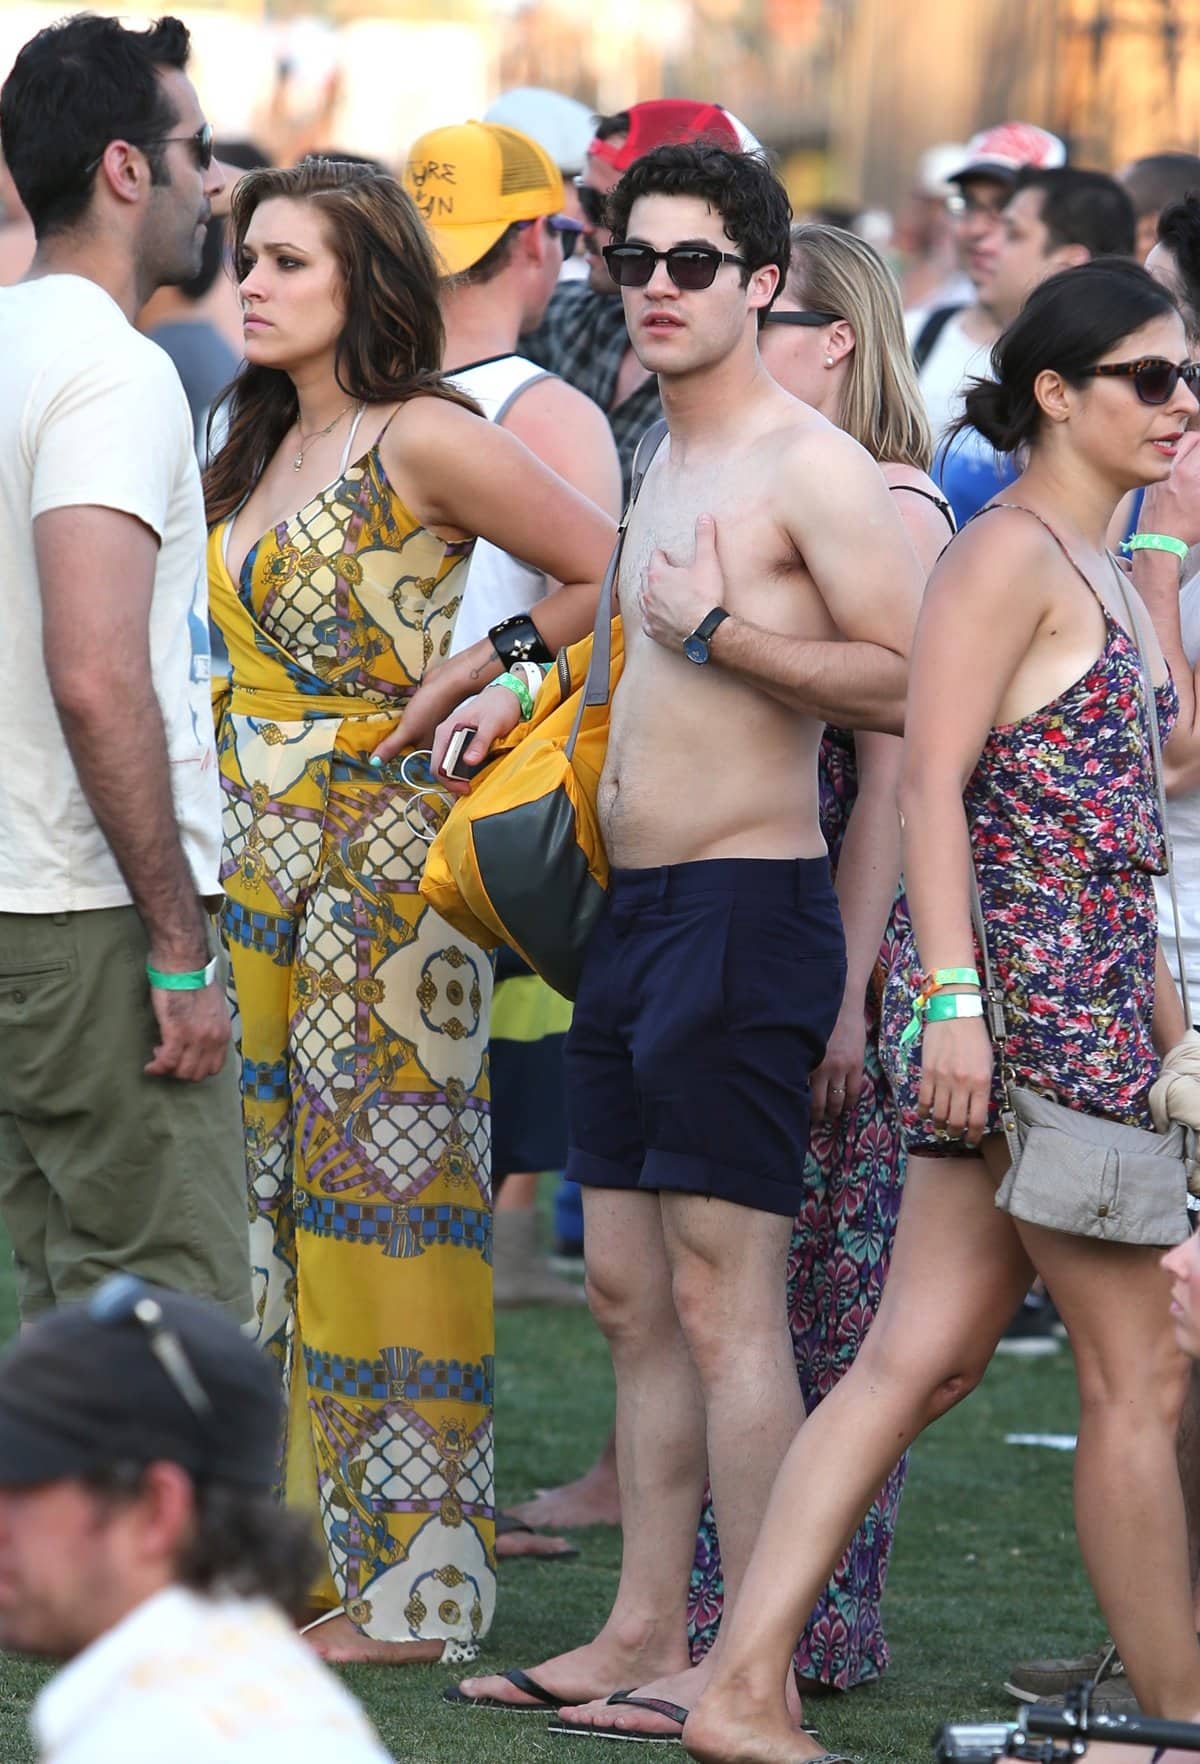 Darren Criss and Mia Swier attend day 2 of the 2013 Coachella Valley Music & Arts Festival